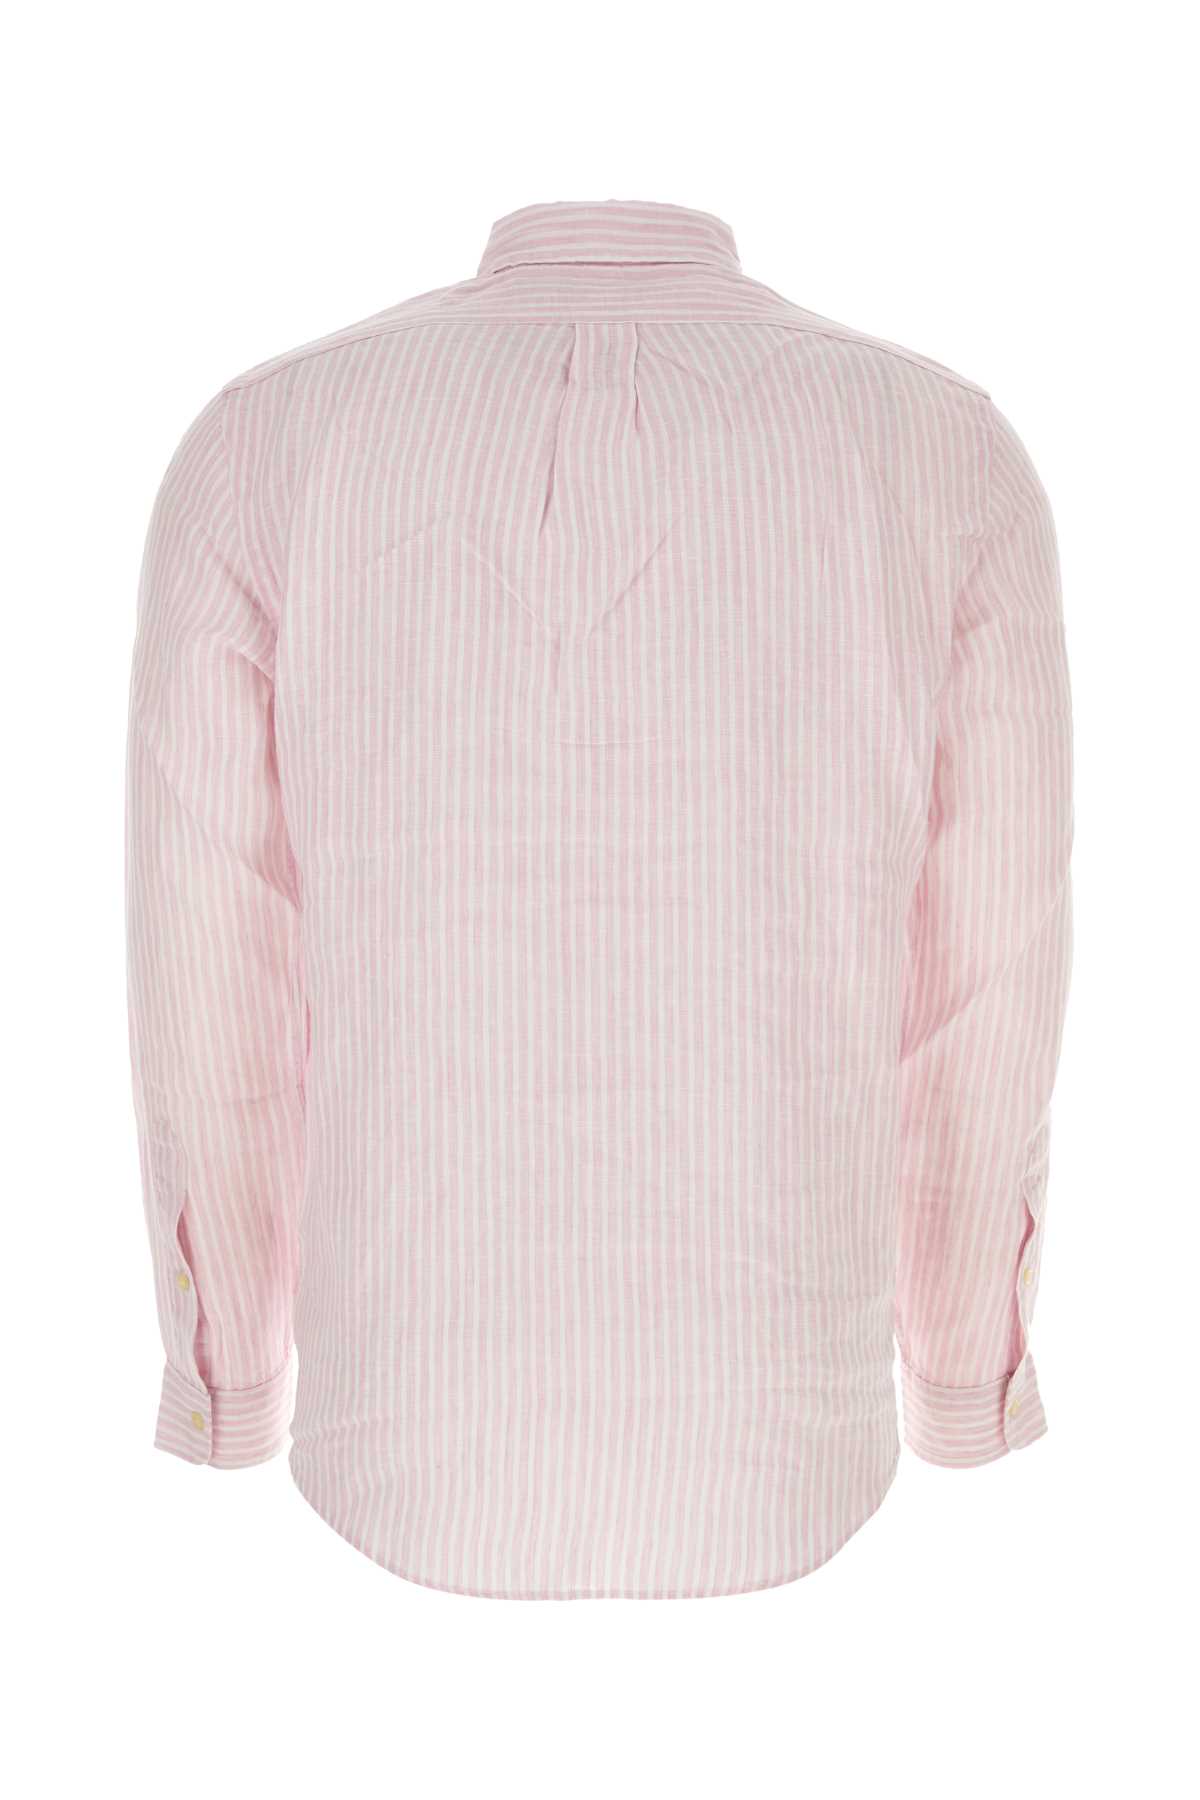 Polo Ralph Lauren Printed Linen Shirt In Pinkwhite